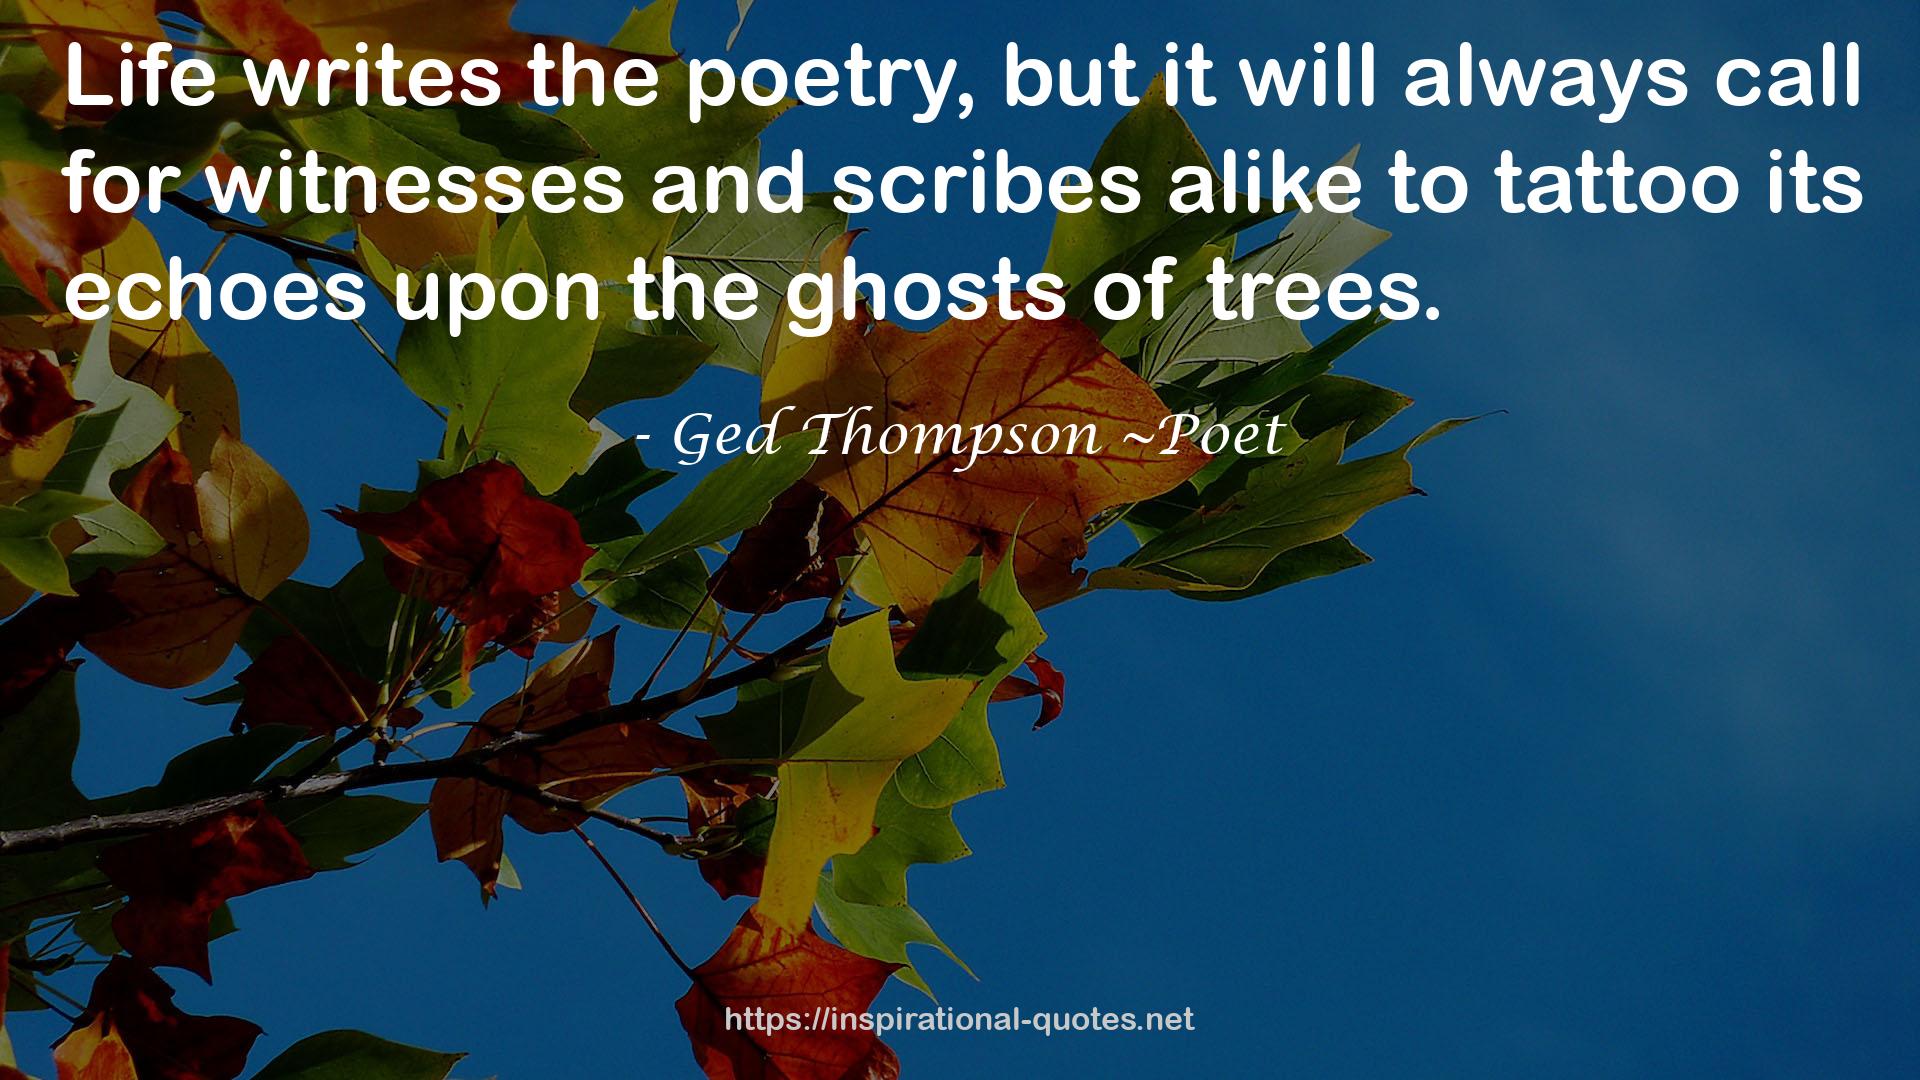 Ged Thompson ~Poet QUOTES